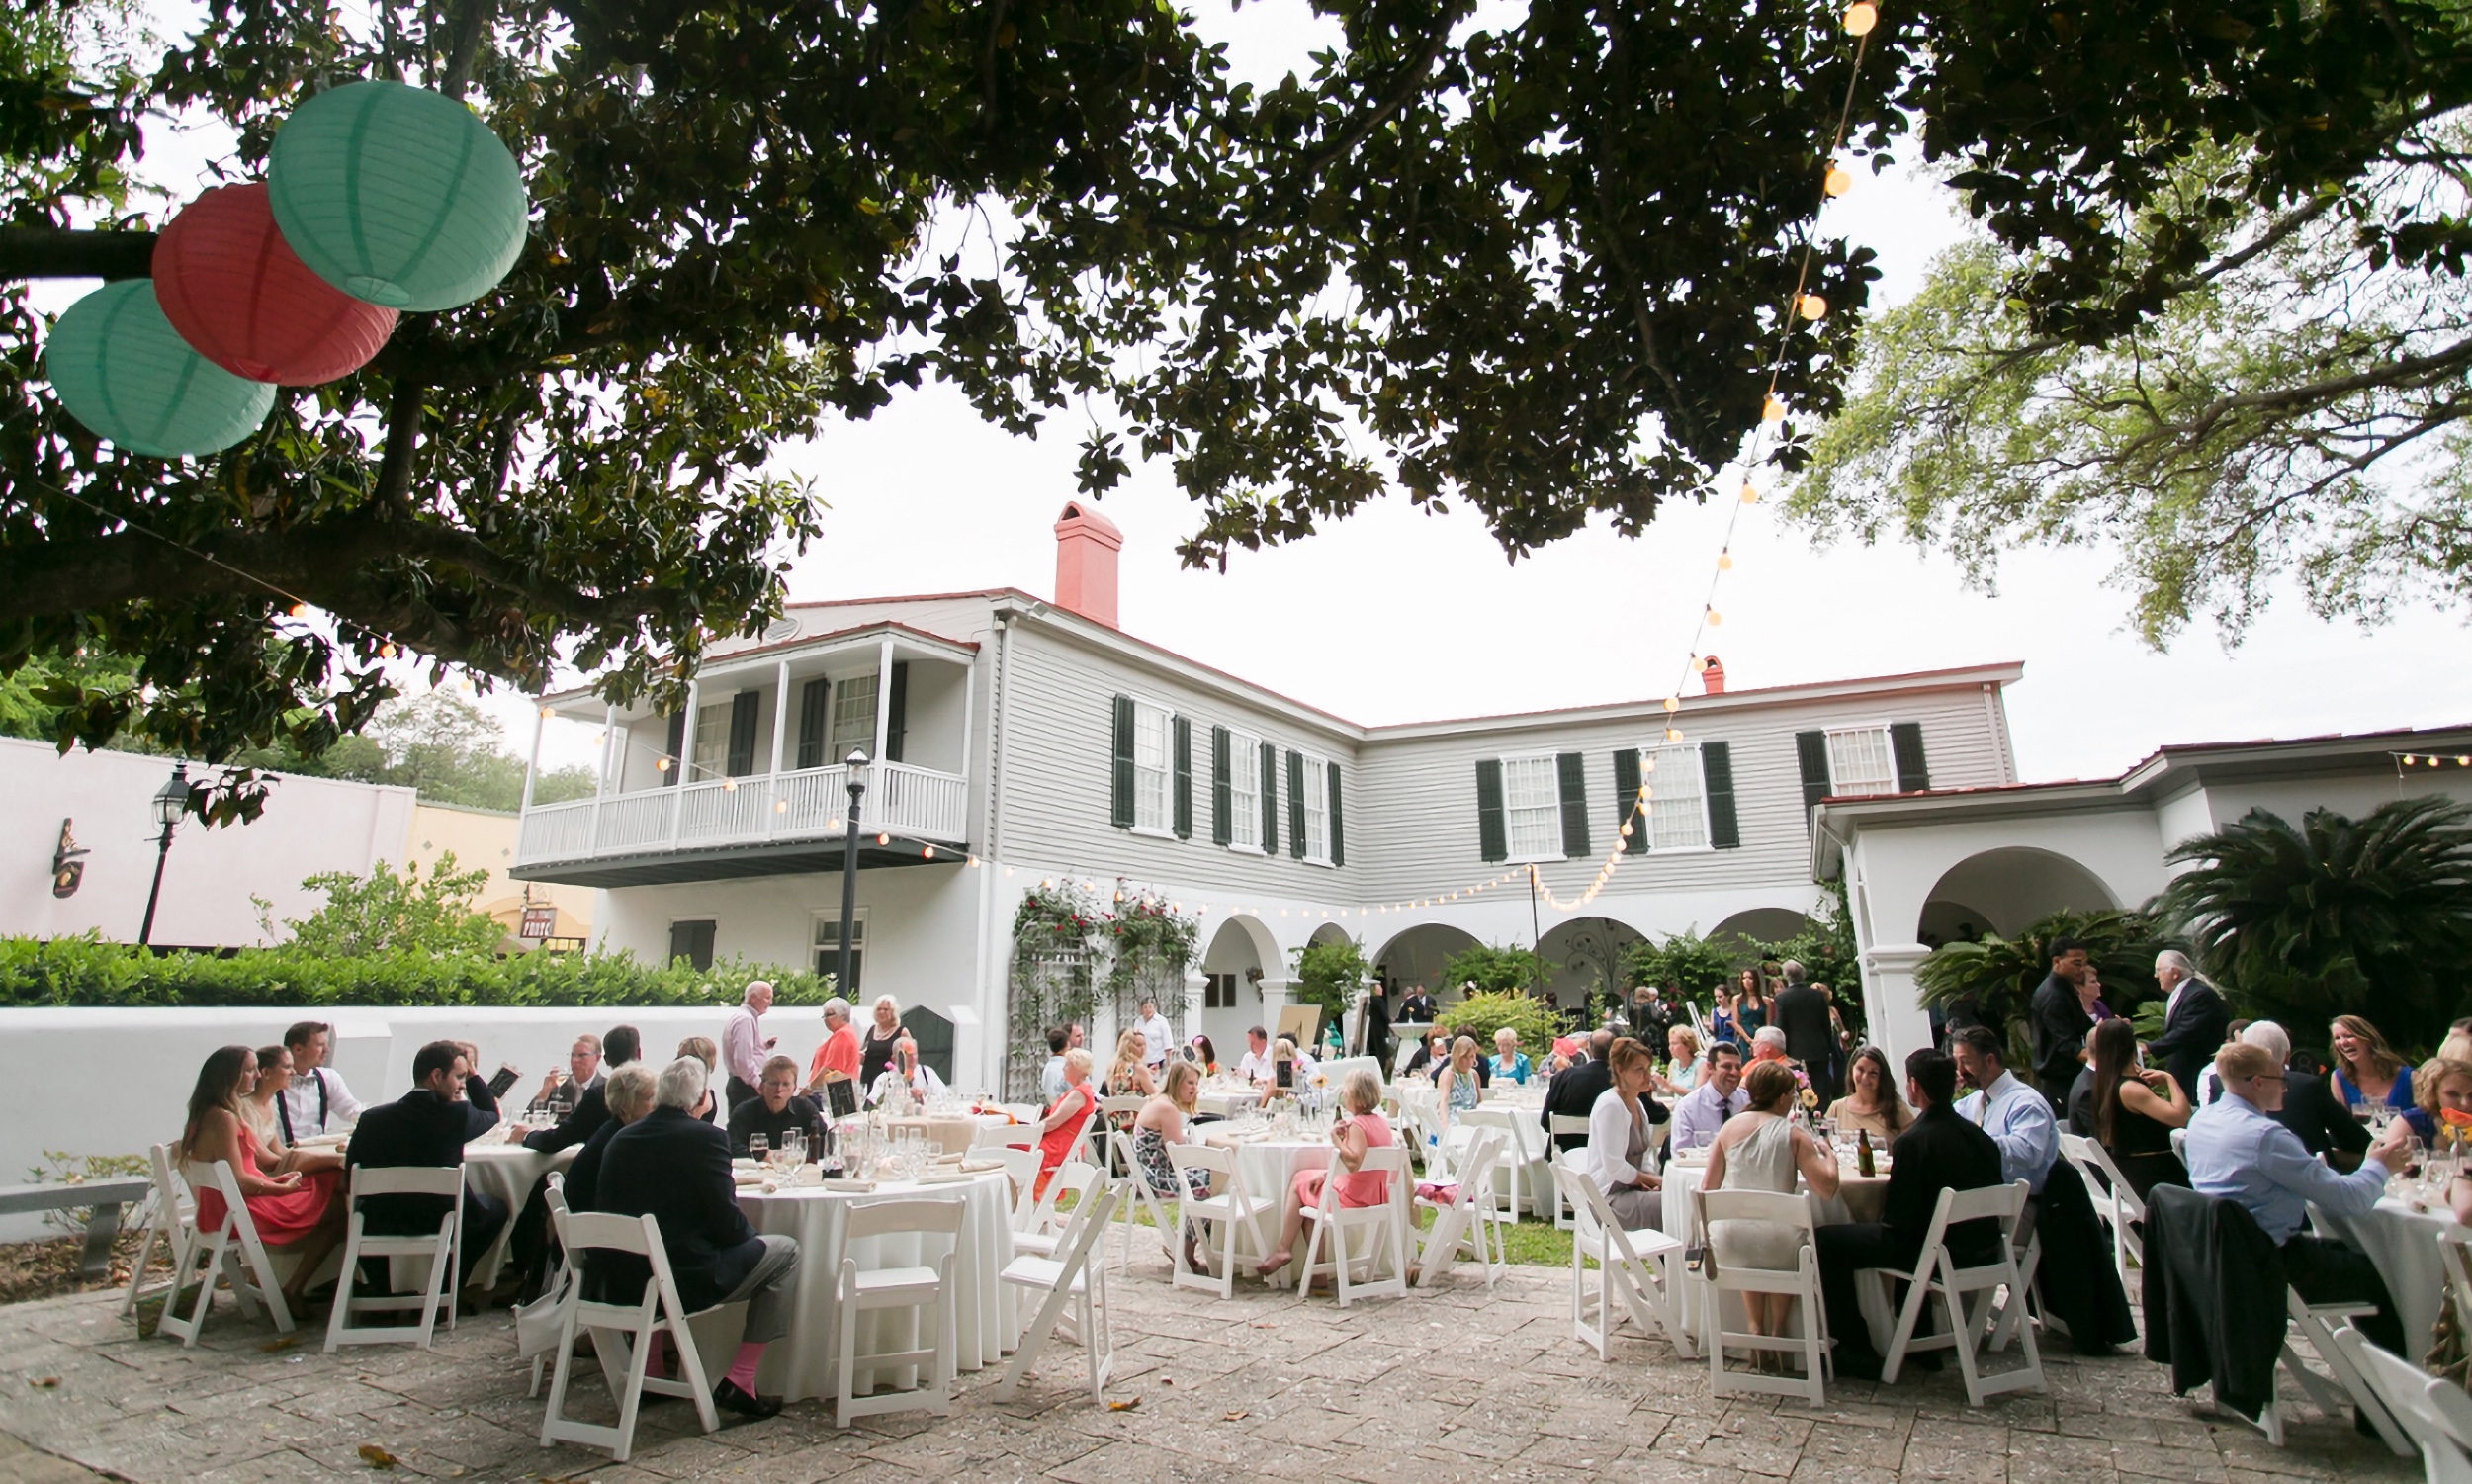 A wedding reception held outside the Peña-Peck House